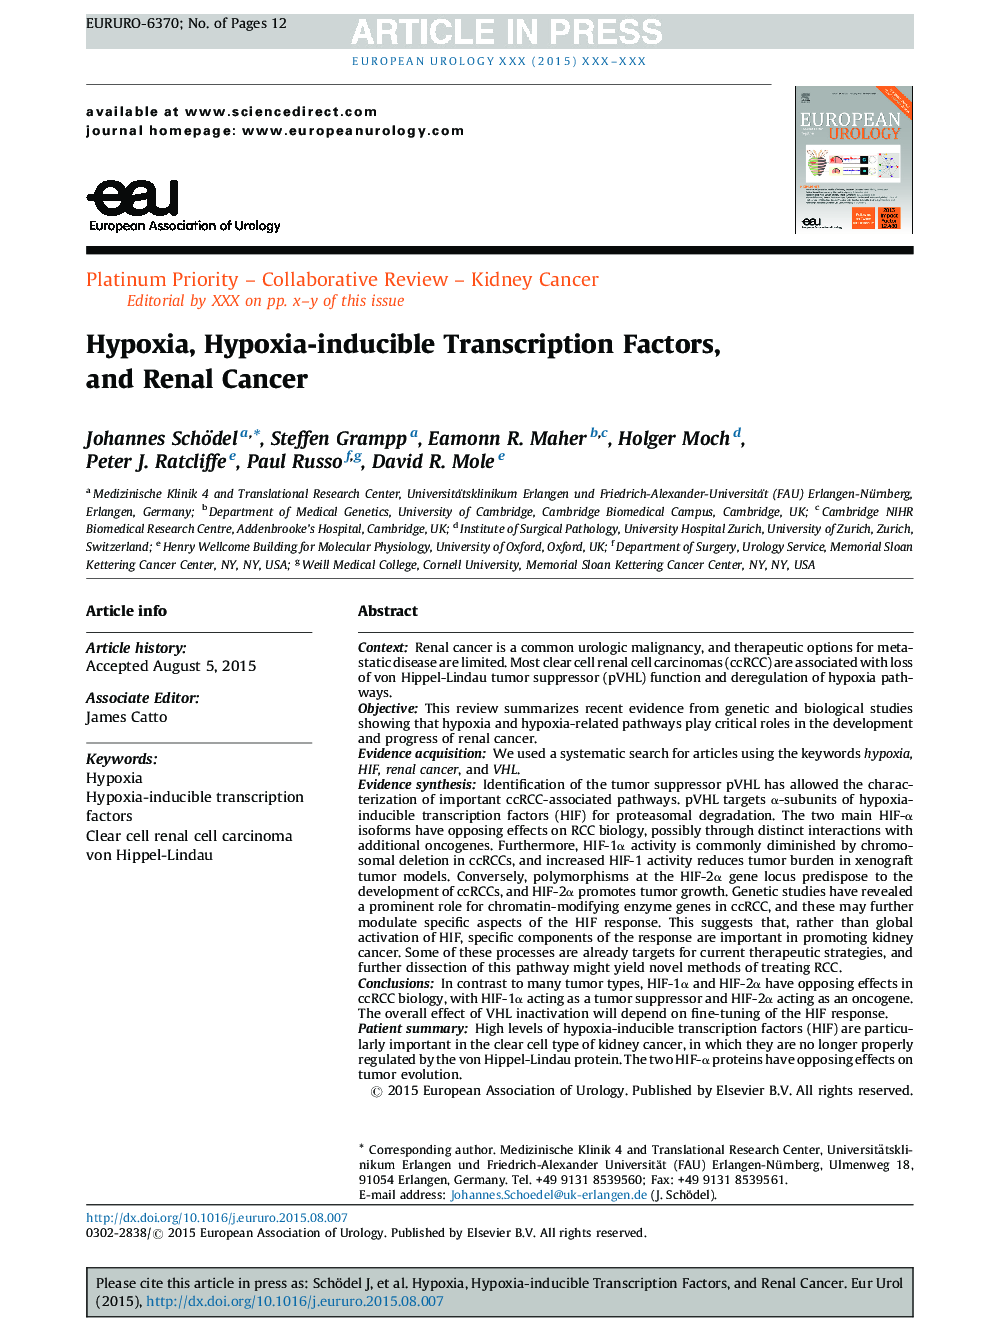 Hypoxia, Hypoxia-inducible Transcription Factors, and Renal Cancer